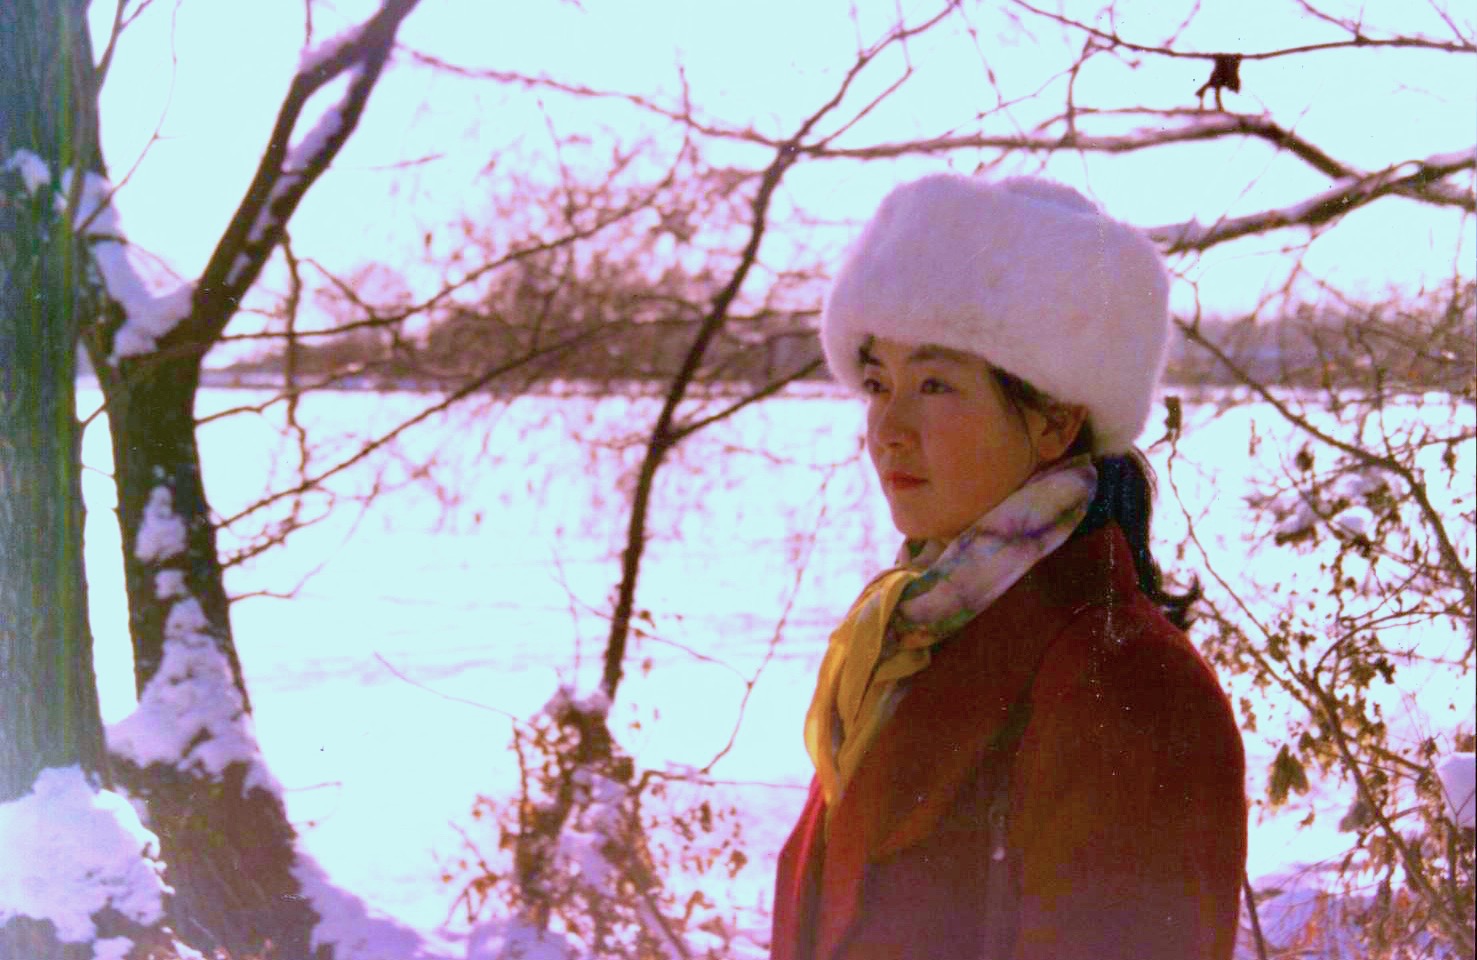 Jennifer at Summer Palace in Beijing in 1991. 曾铮1991年摄於北京颐和园。